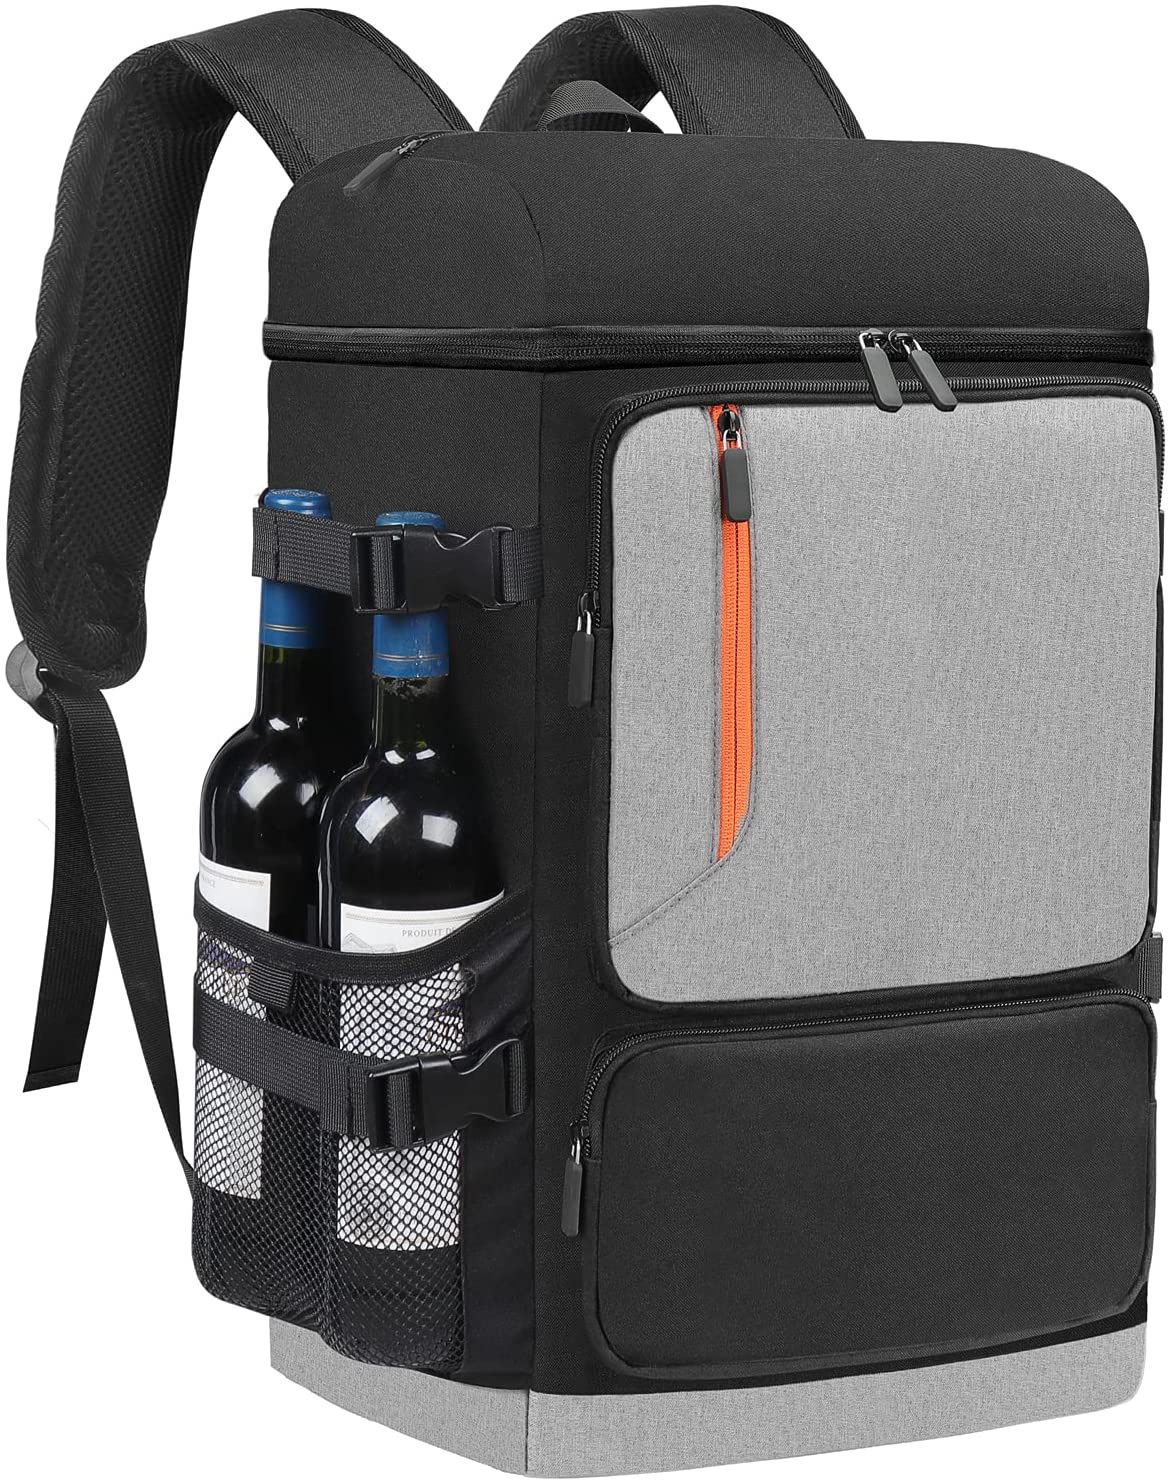 Lightweight Soft Beach Cooler Leak-proof Insulated Waterproof Cooler Large Capacity Bag 